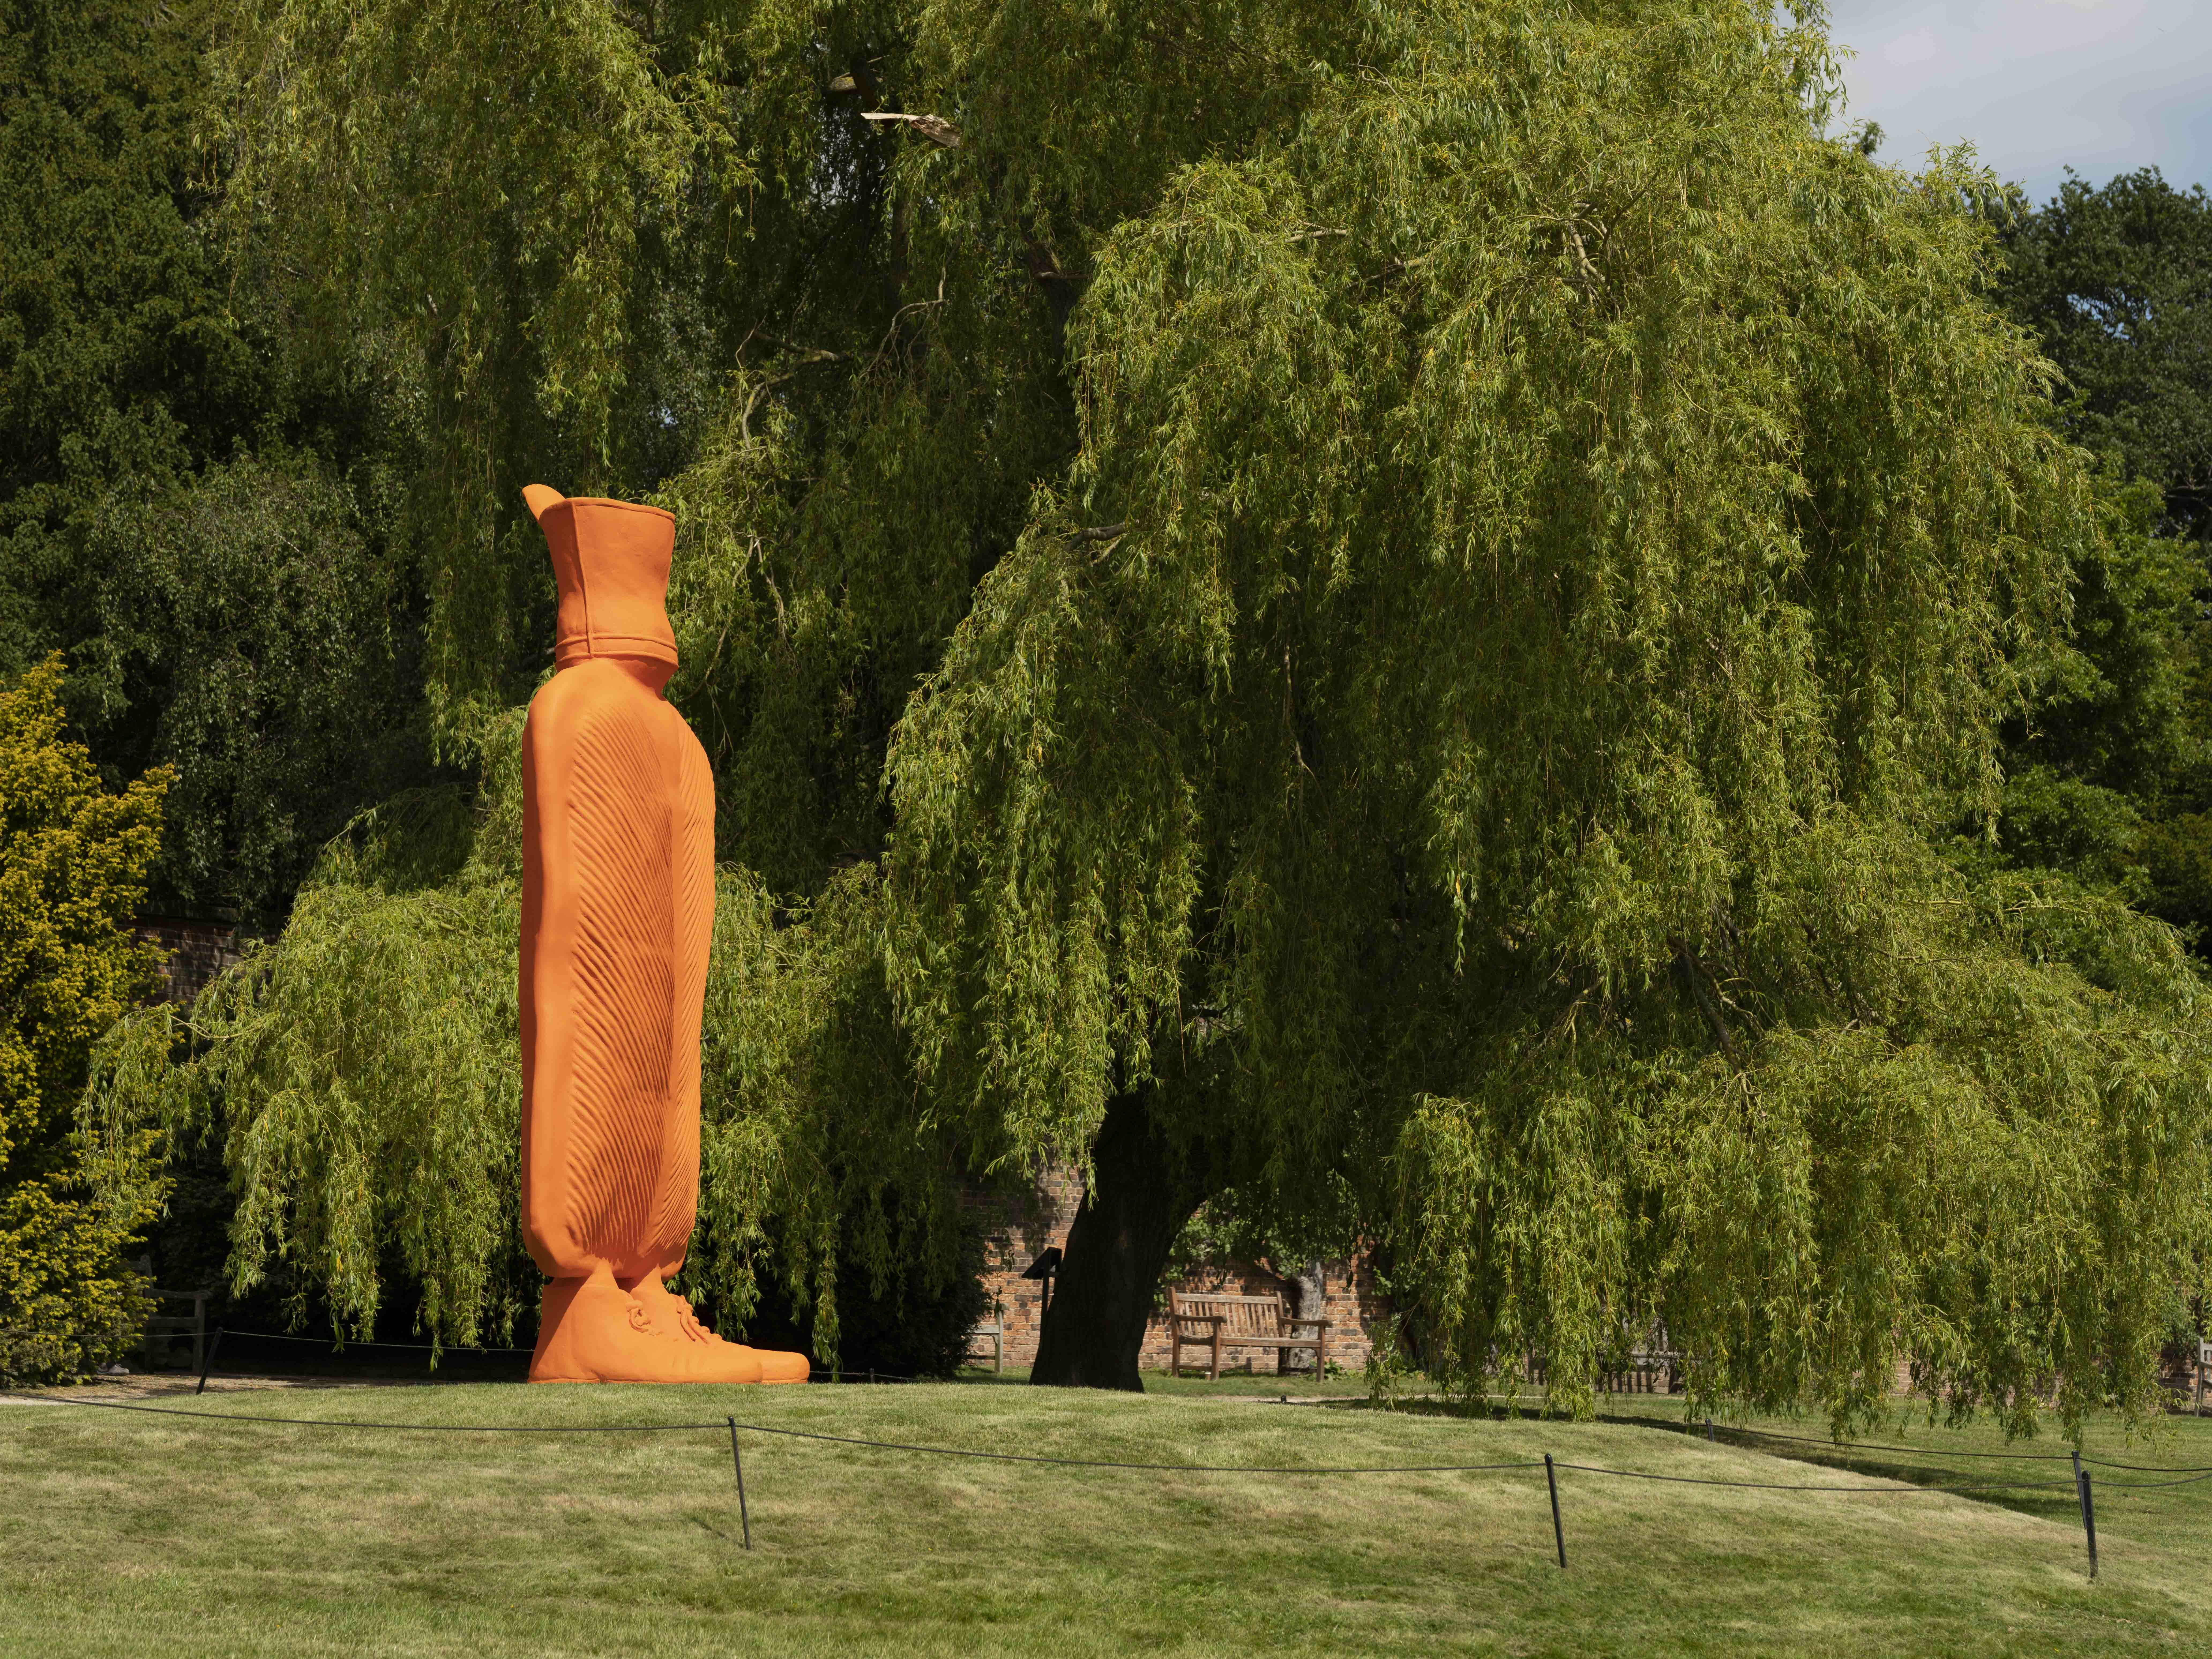 A giant orange hot water bottle on grass